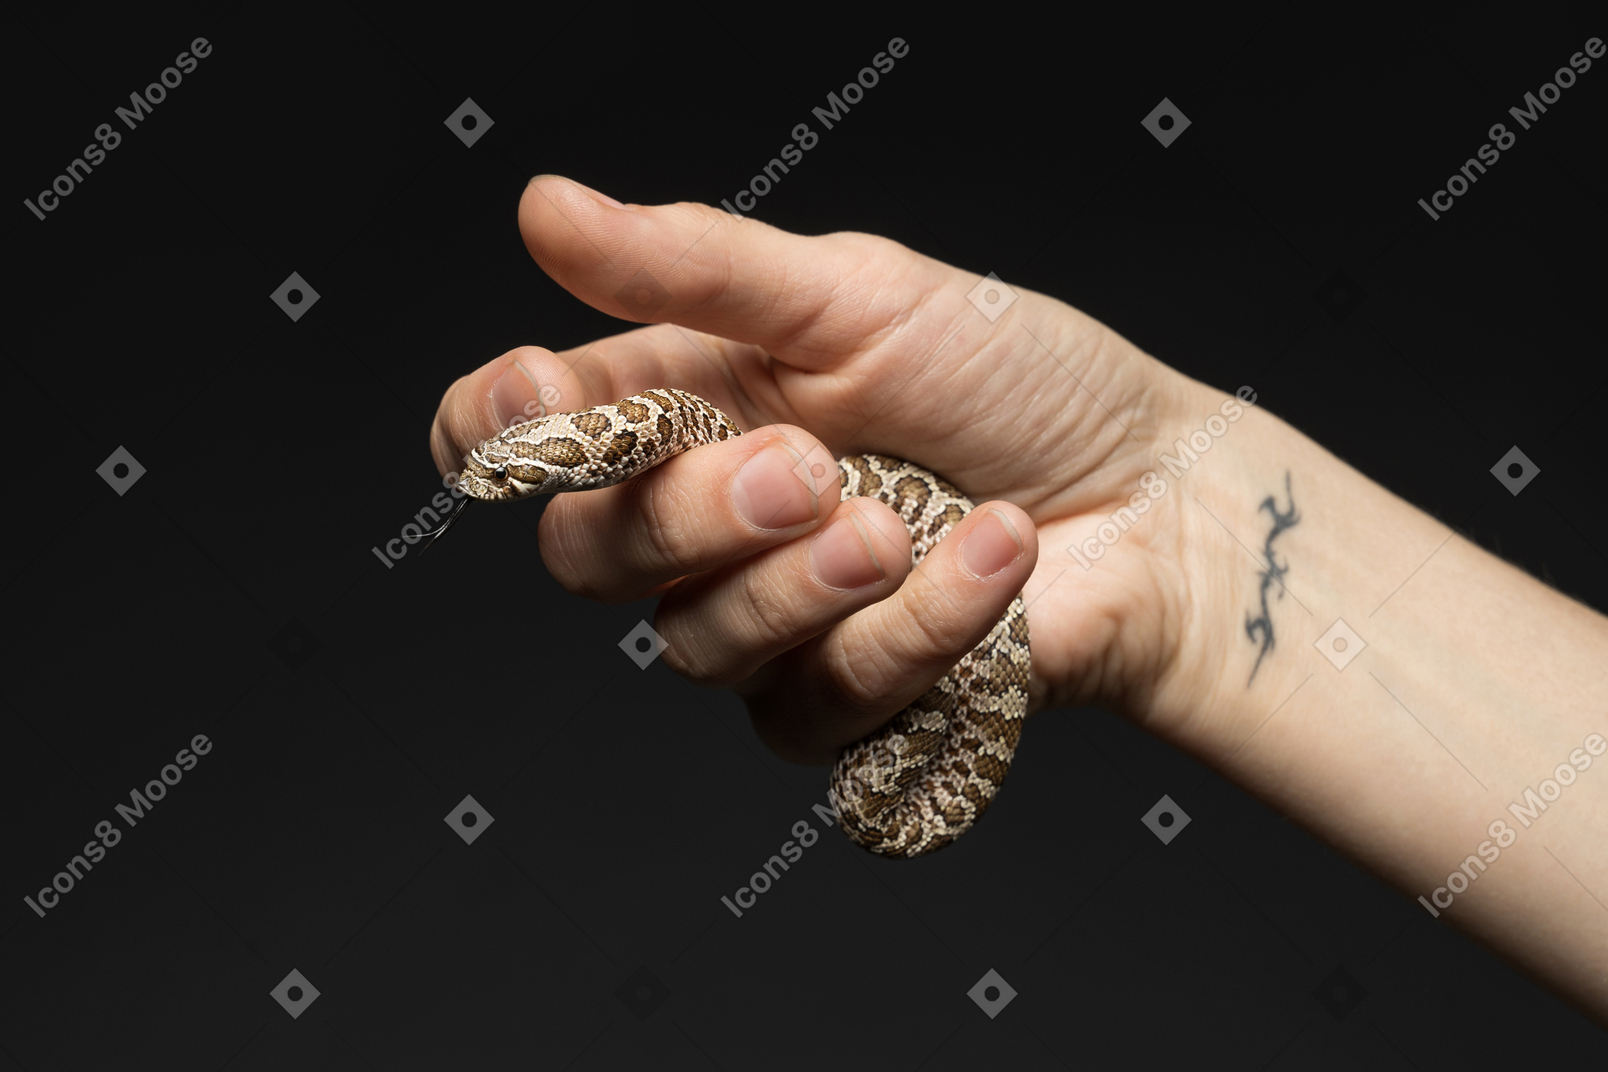 Little snake in human hand